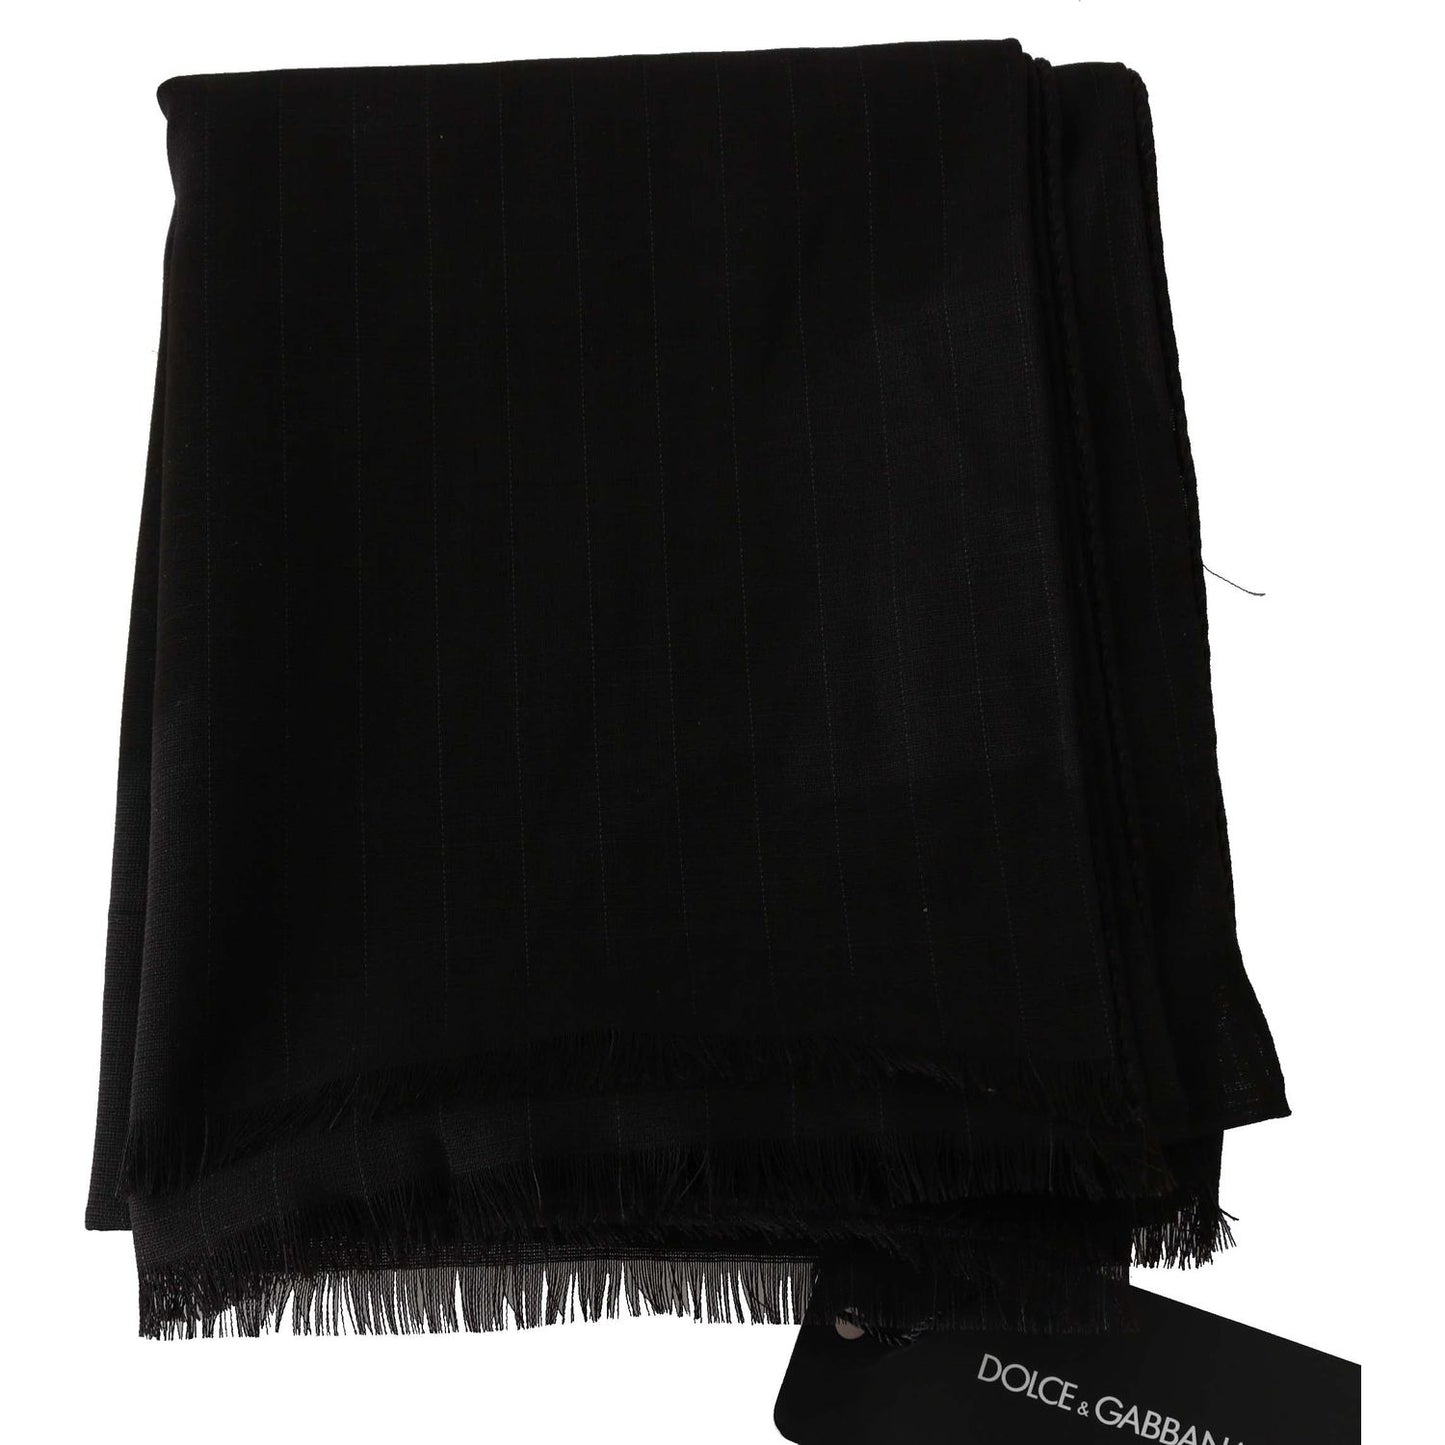 Dolce & Gabbana Elegant Striped Wool Men's Scarf Wool Wrap Shawls brown-virgin-wool-striped-pattern-wrap-scarf IMG_9955-1.jpg